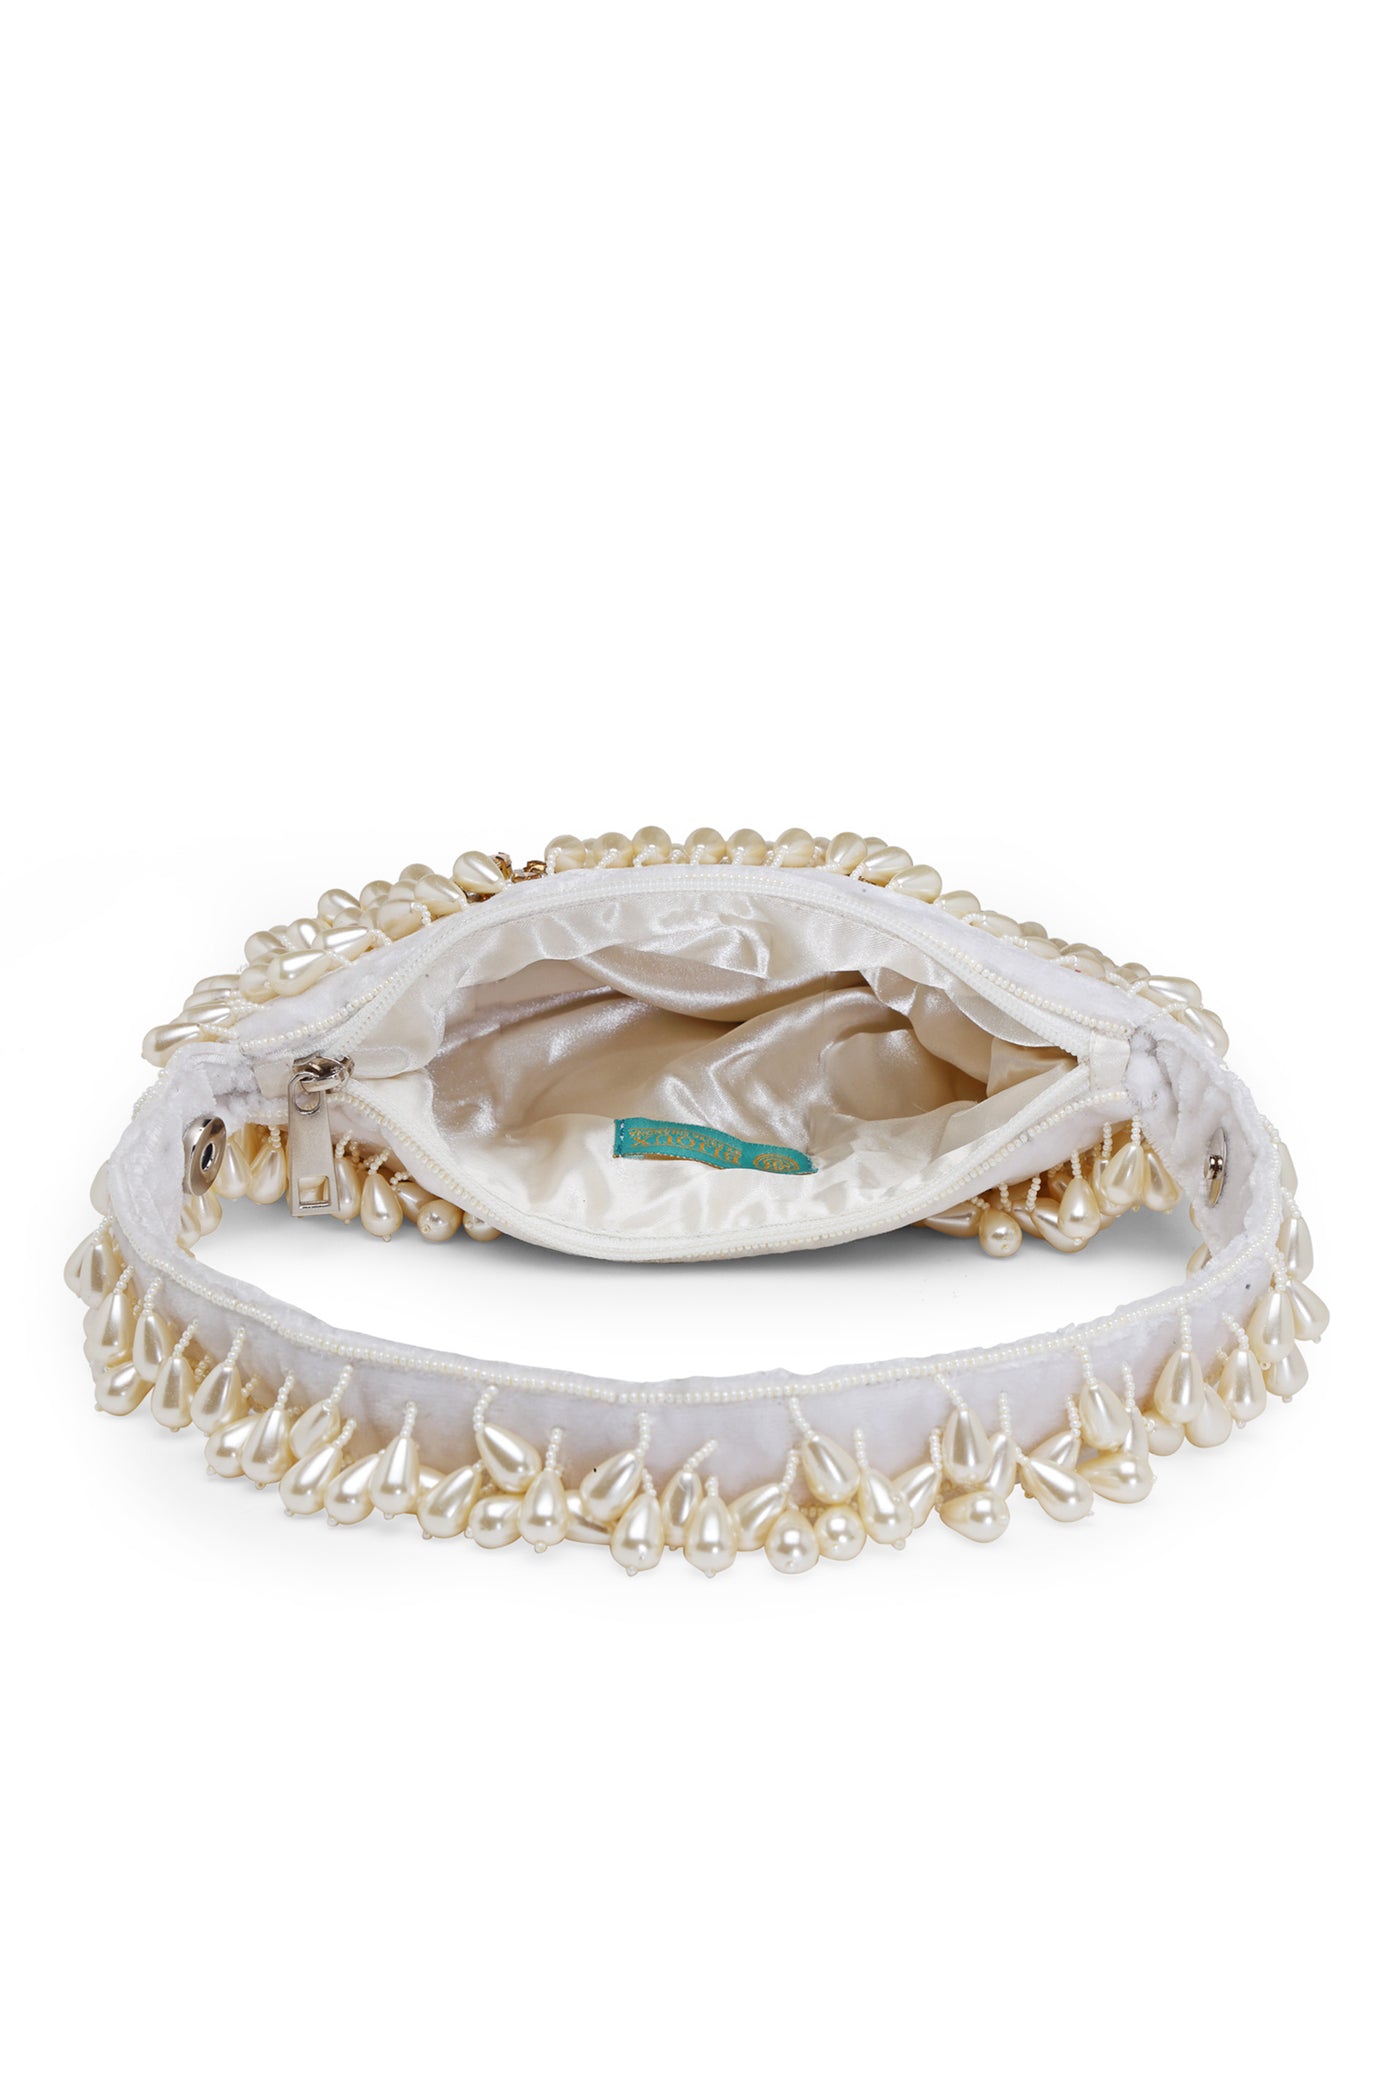 Bijoux by priya chandna diamonds and pearls ivory fashion accessories indian designer wear online shopping melange singapore